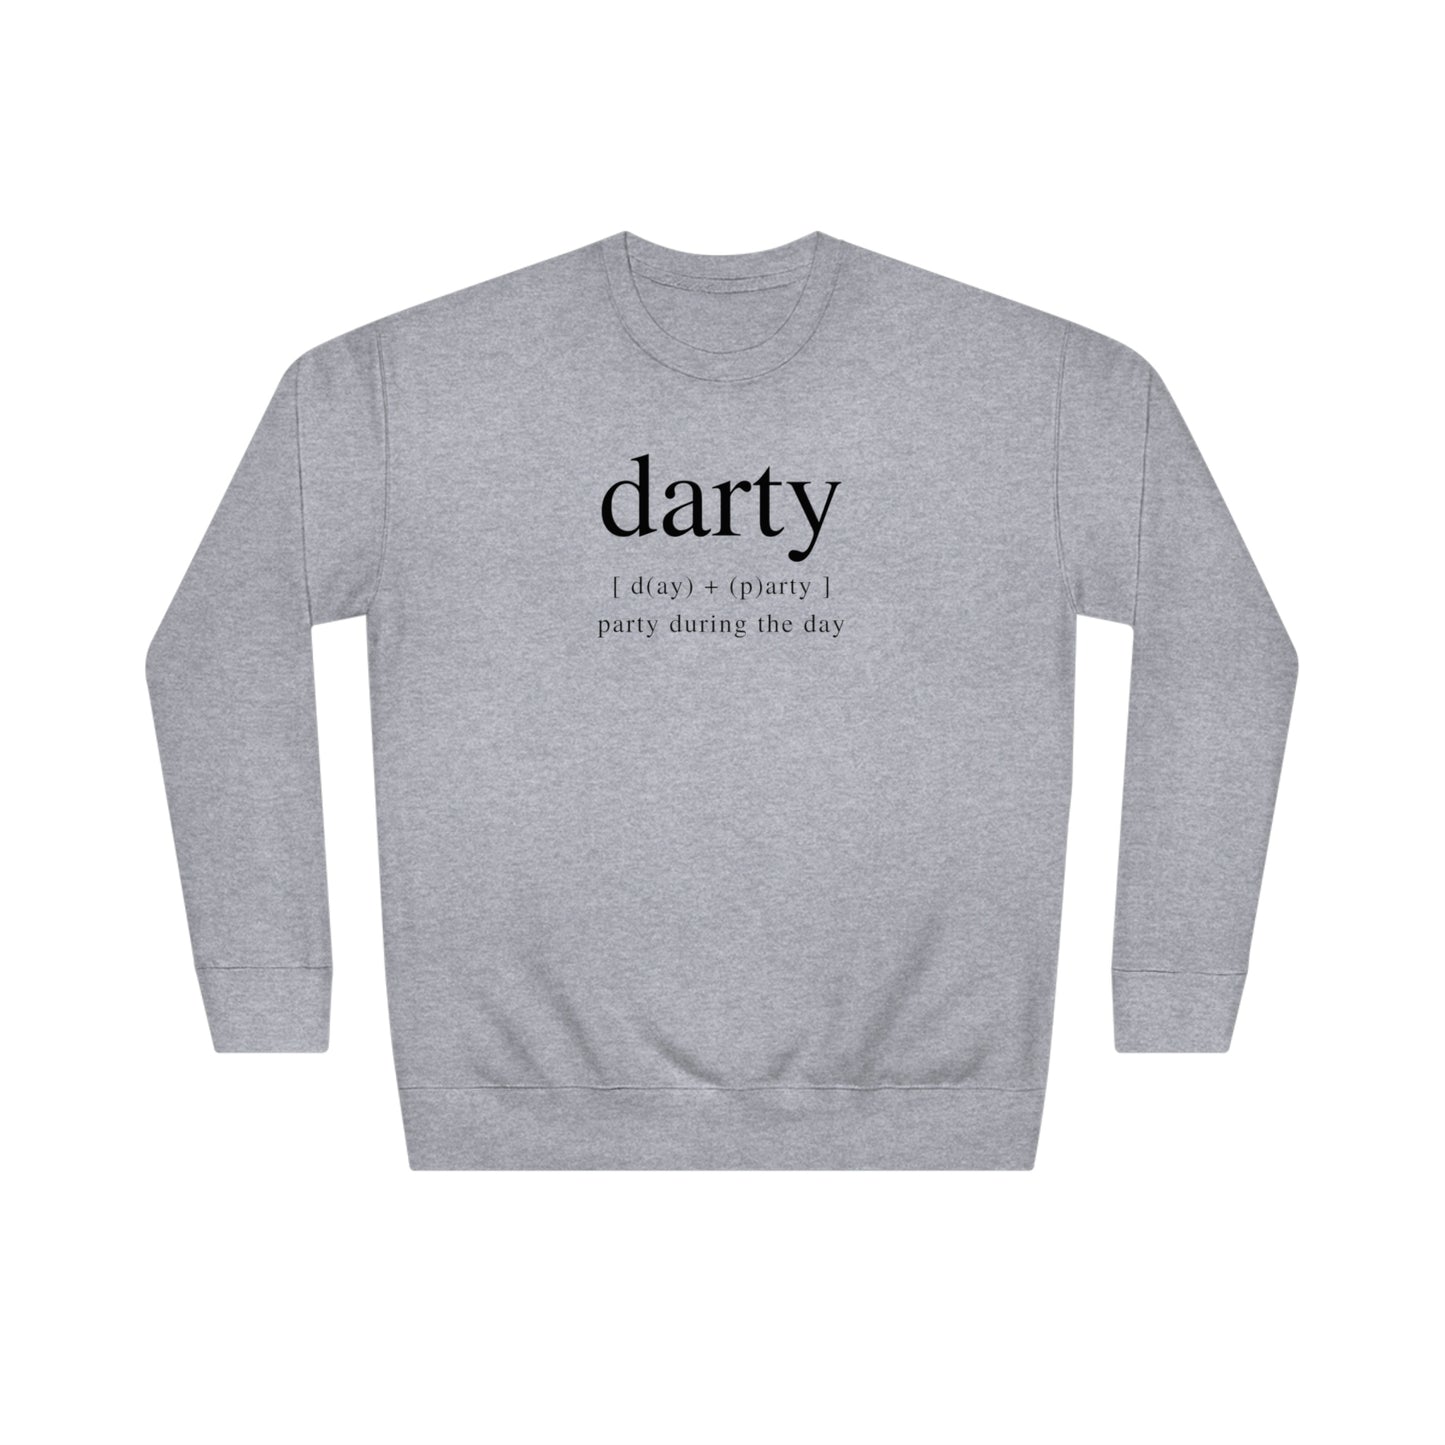 Darty Crew Sweatshirt